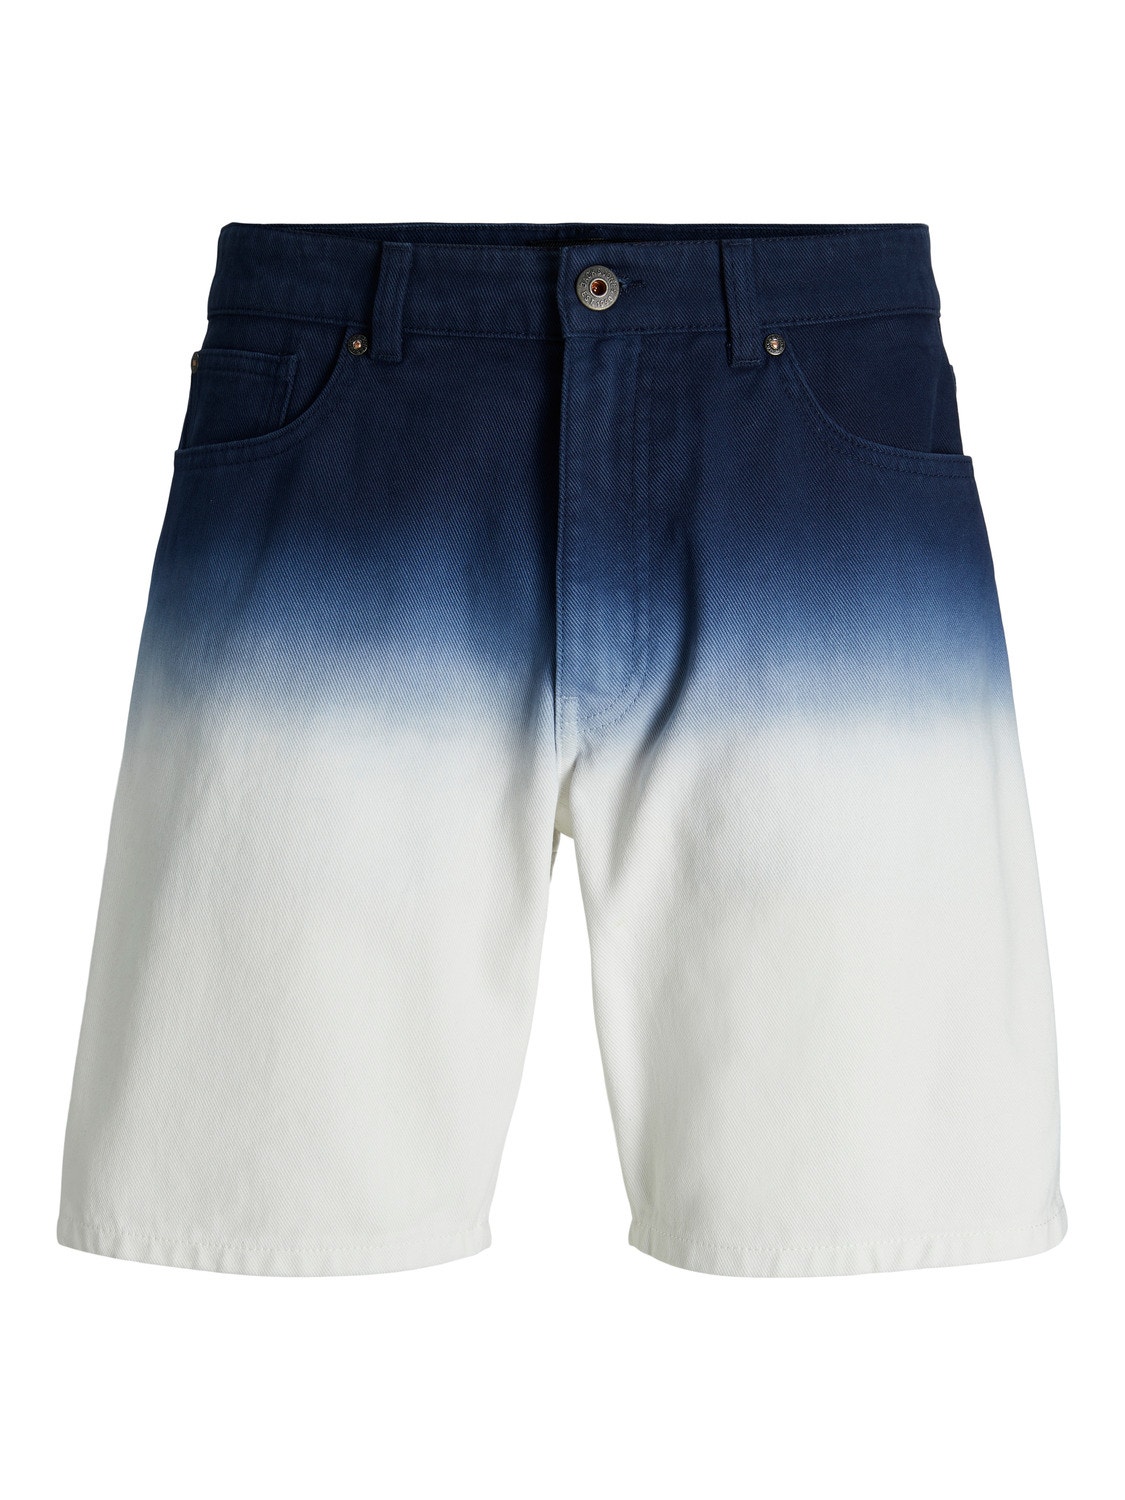 Jack & Jones Bermuda in jeans Loose Fit -Navy Blazer - 12238627